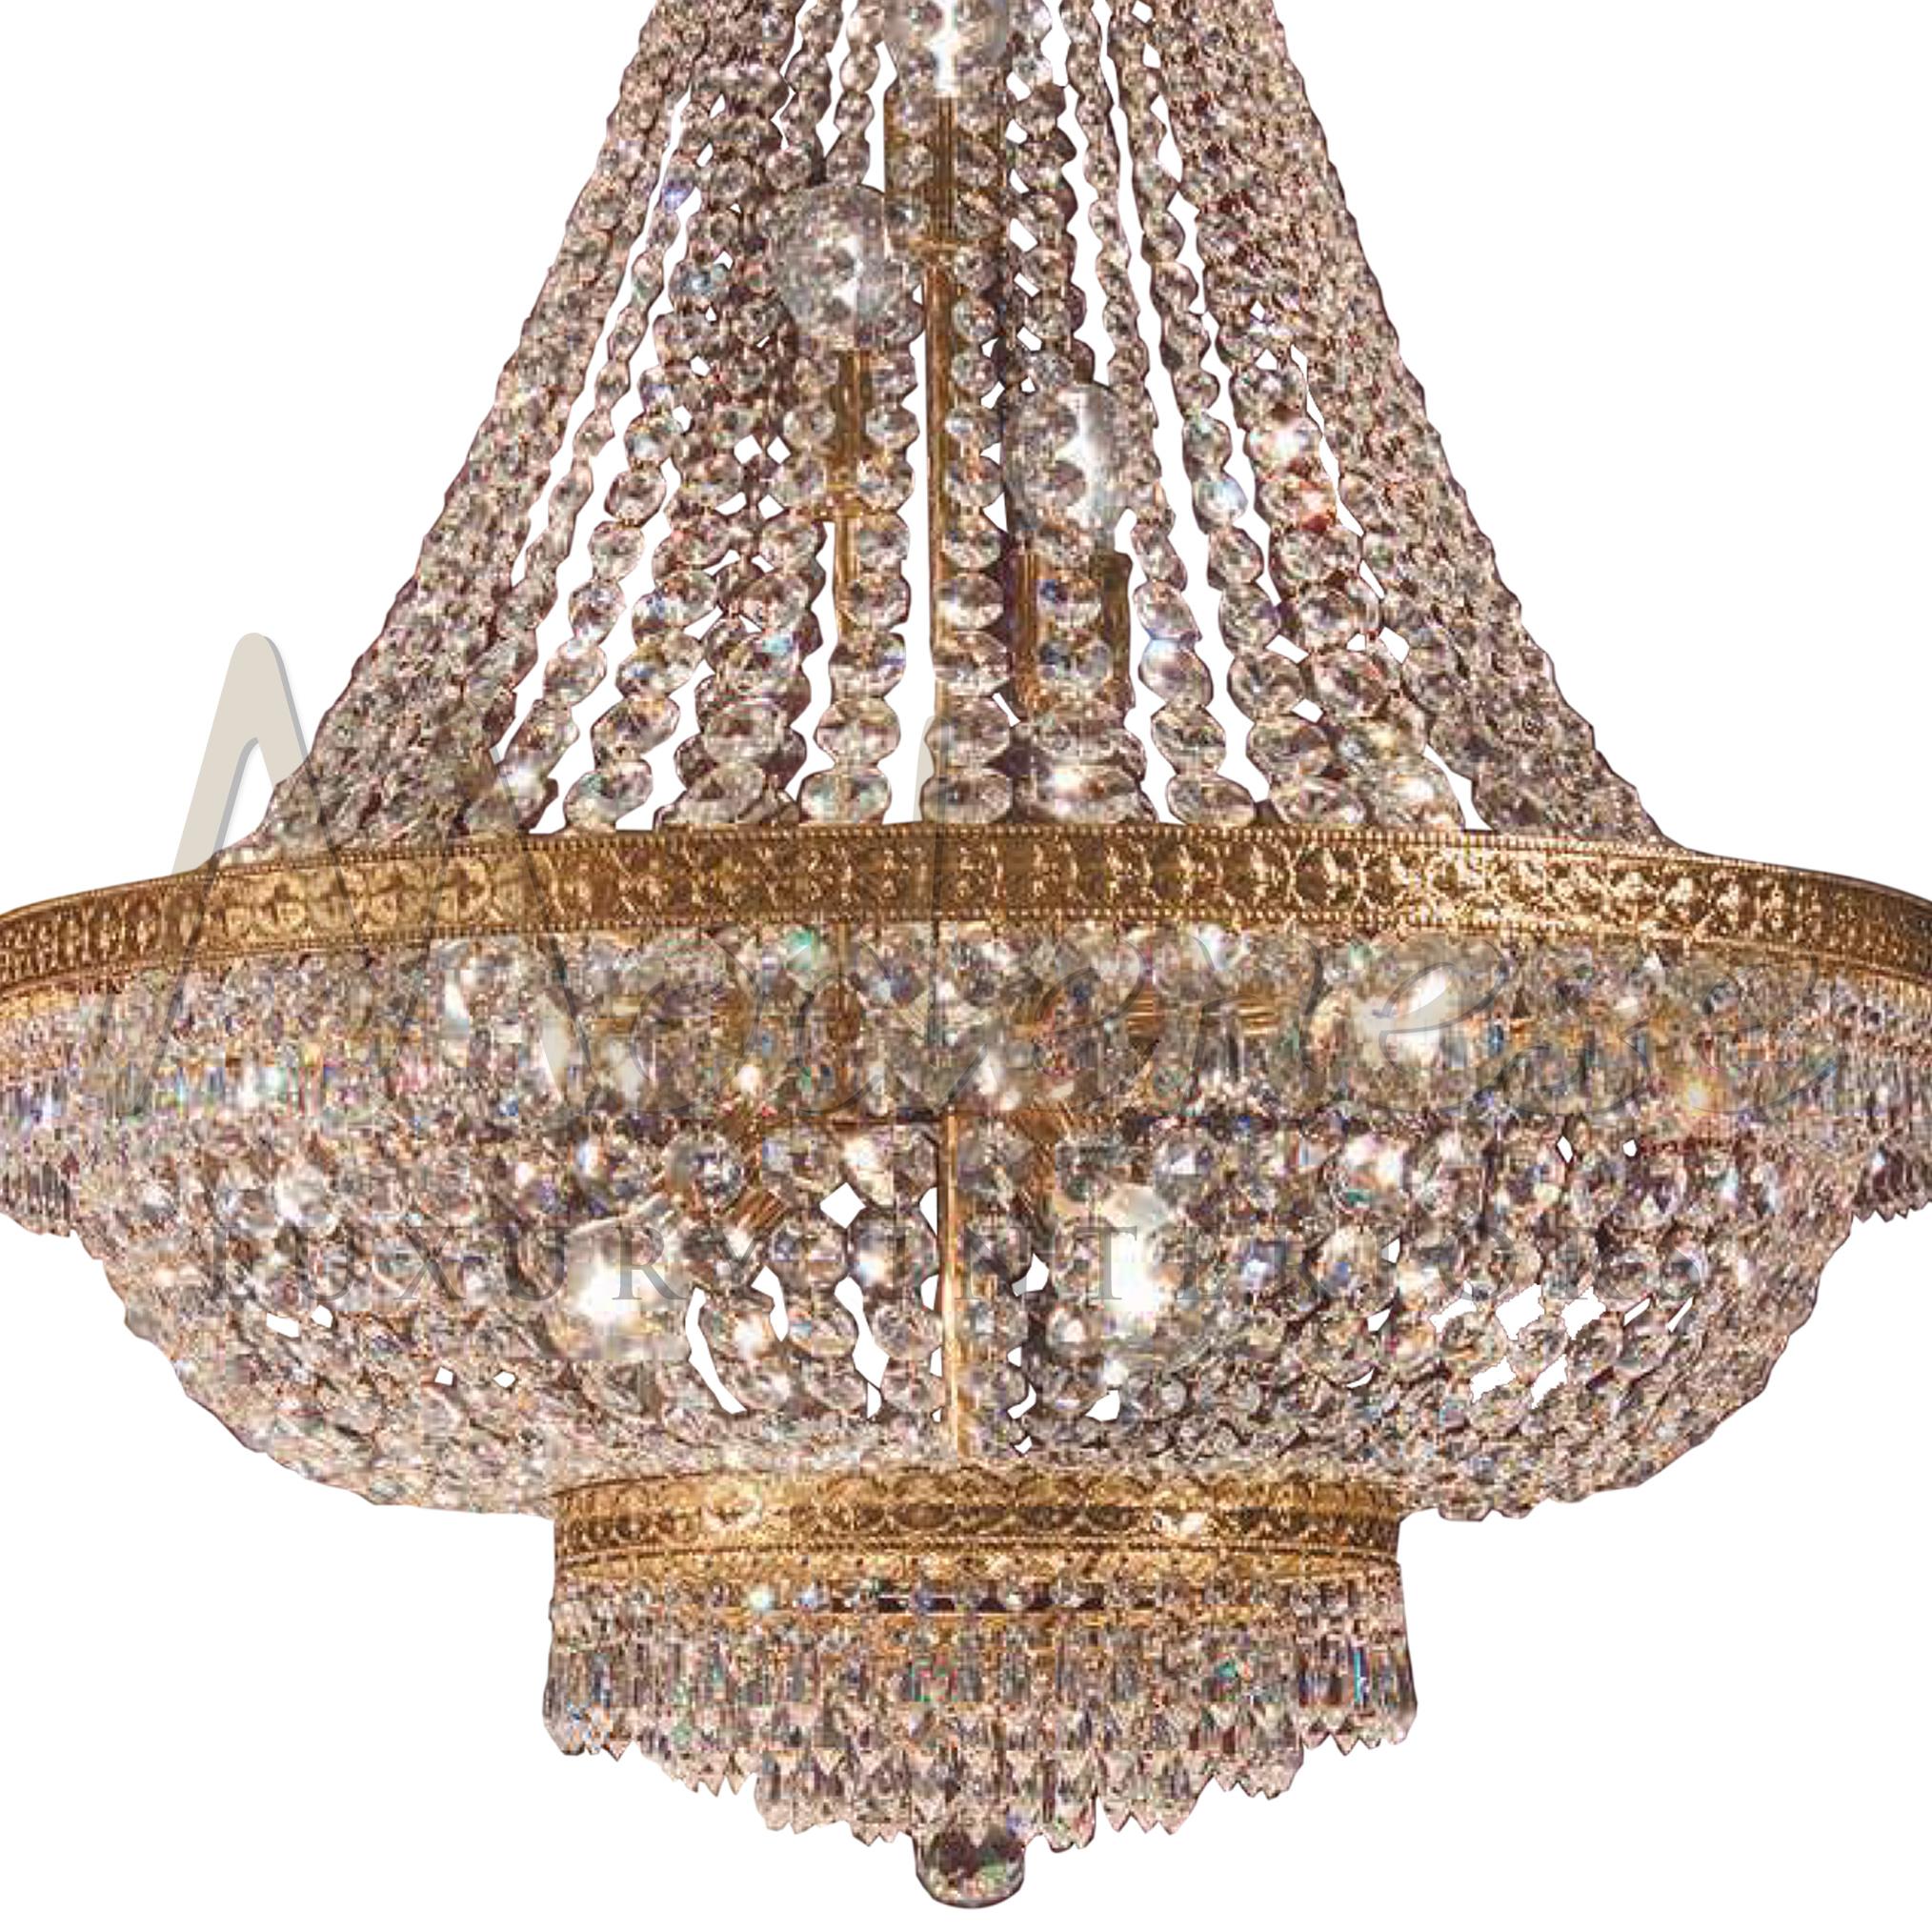 Wunderschöner 12 Lights Kronleuchter mit klarem Scholer-Kristall in 24kt Gold überzogen (Barock) im Angebot